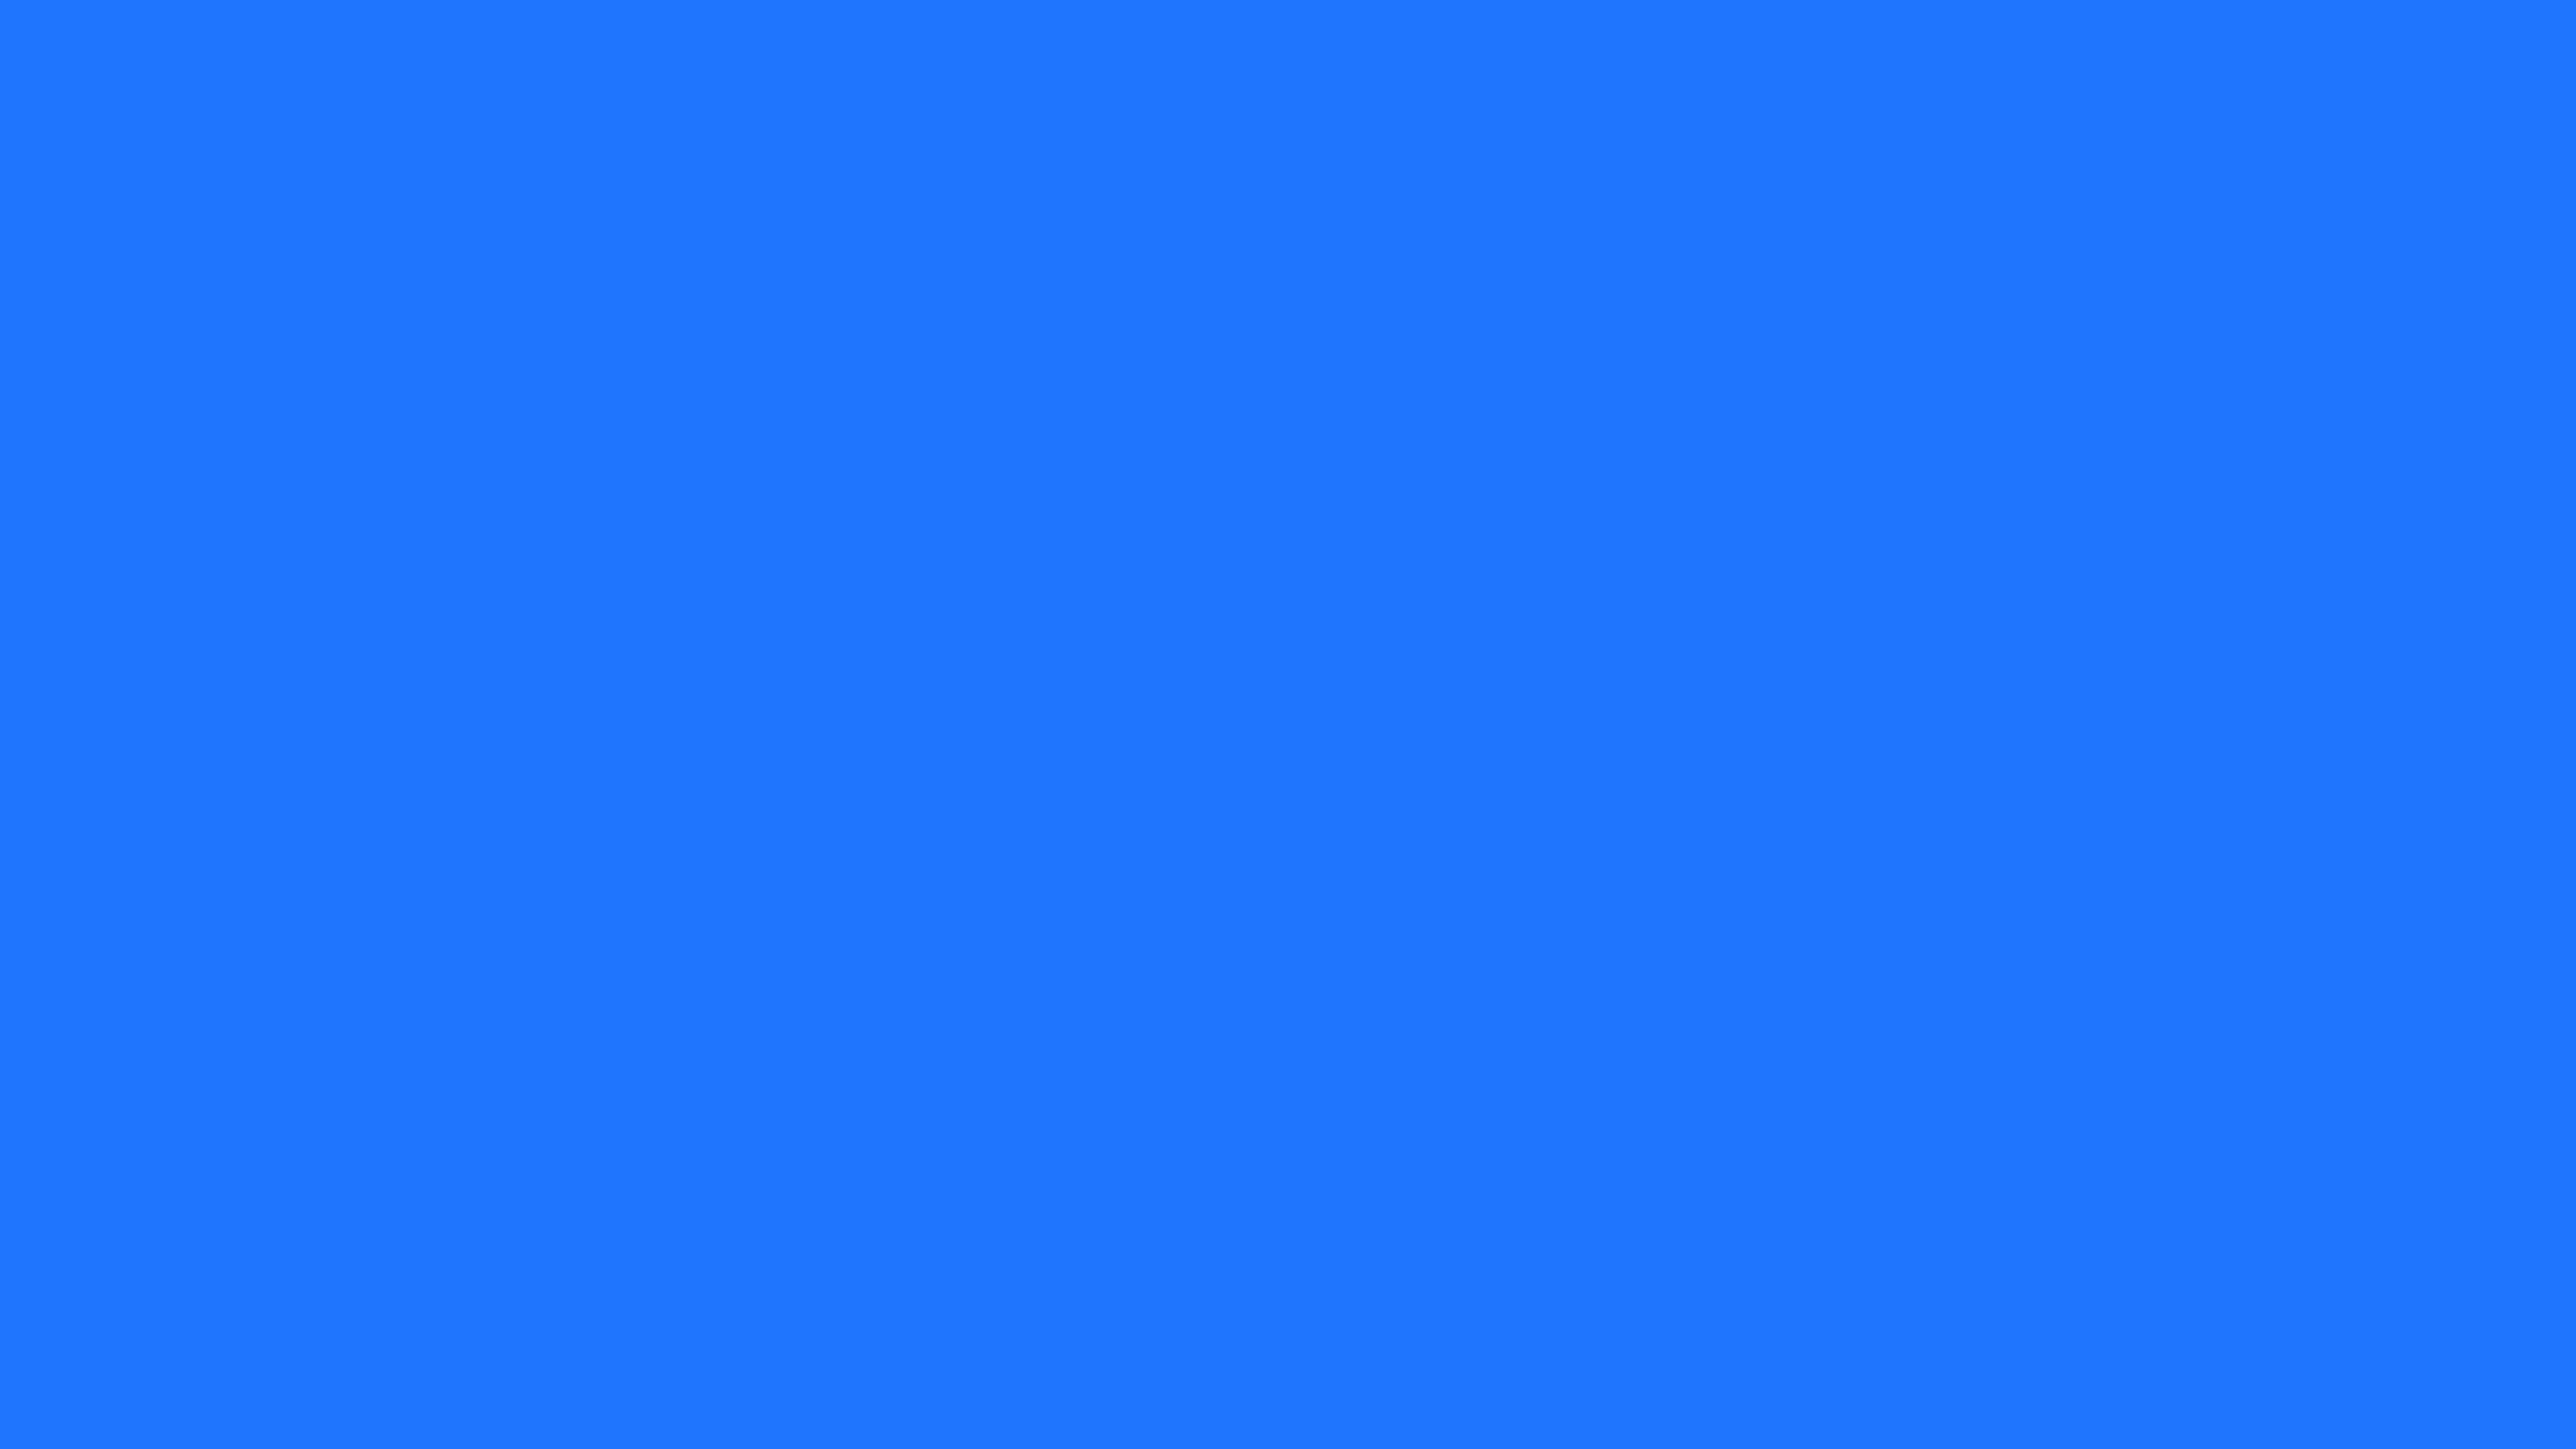 3840x2160 Blue Crayola Solid Color Background